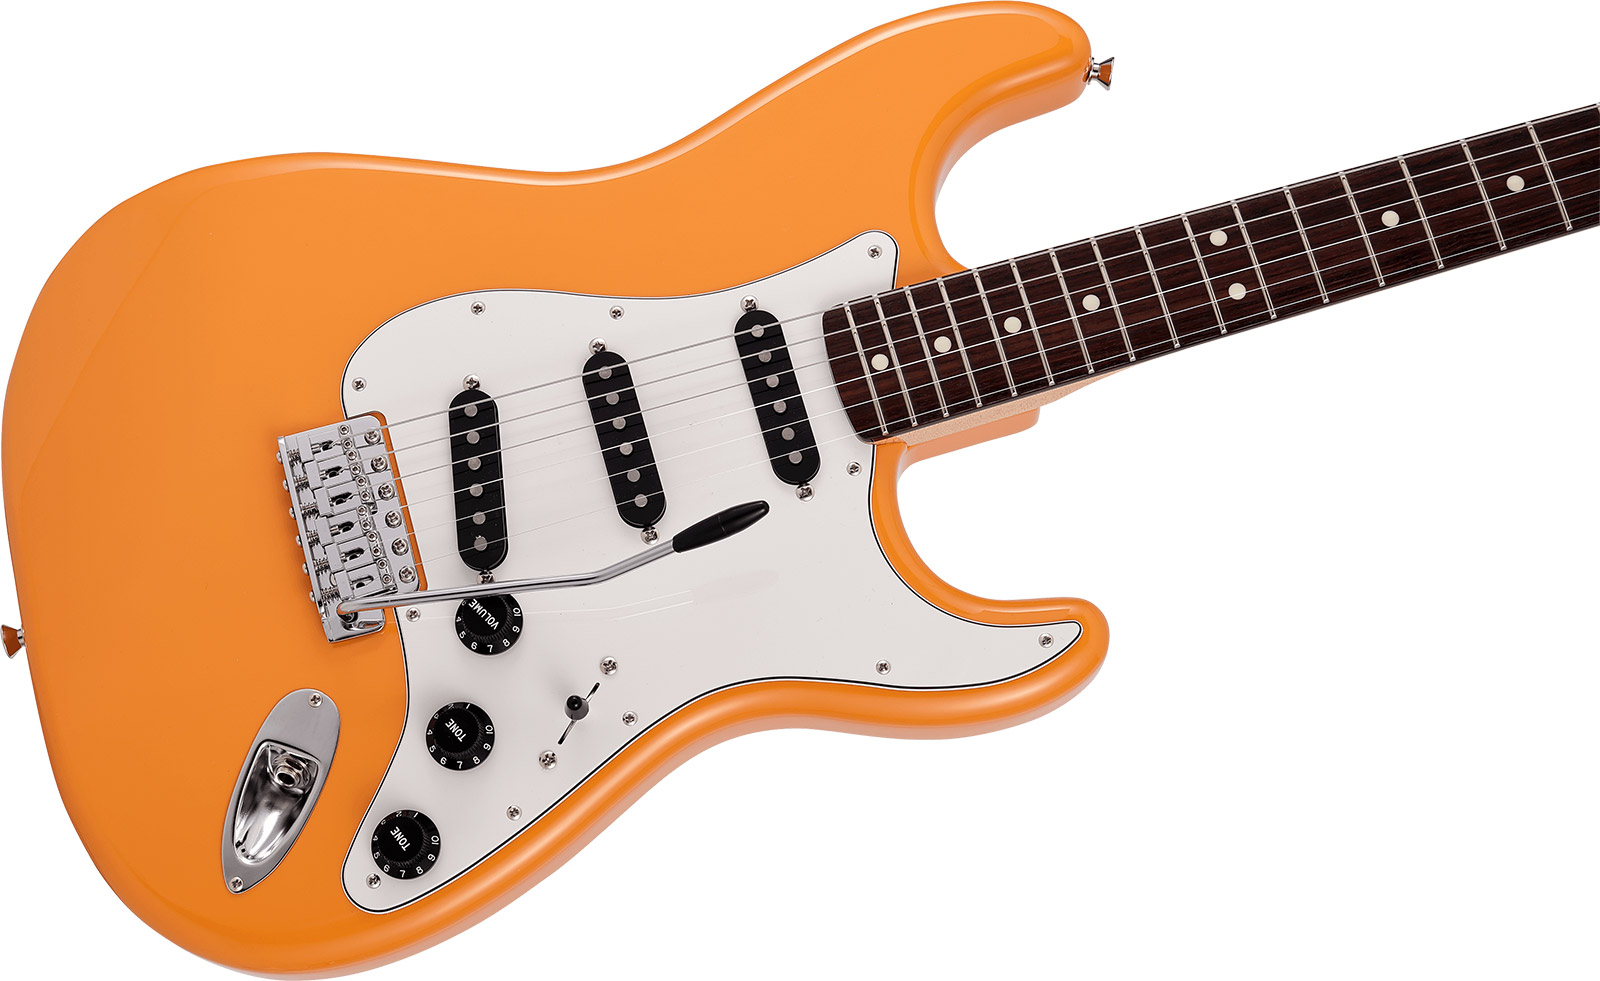 Fender Strat International Color Ltd Jap 3s Trem Rw - Capri Orange - Elektrische gitaar in Str-vorm - Variation 2